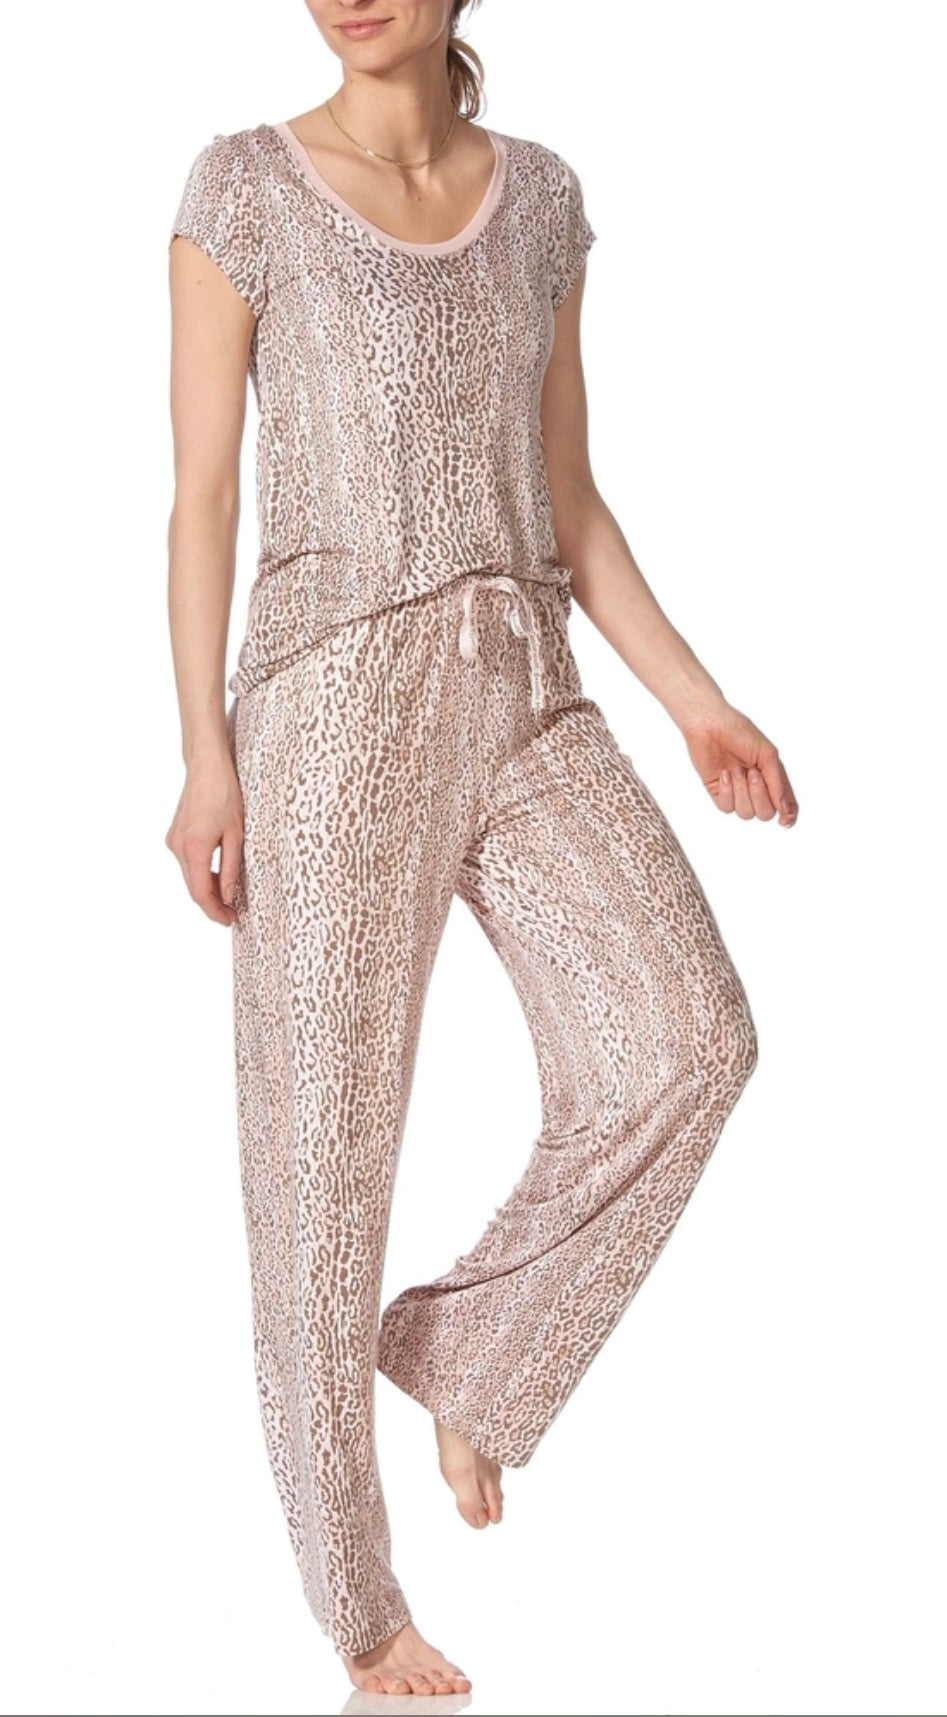 pyjama set - pink and beige leopard